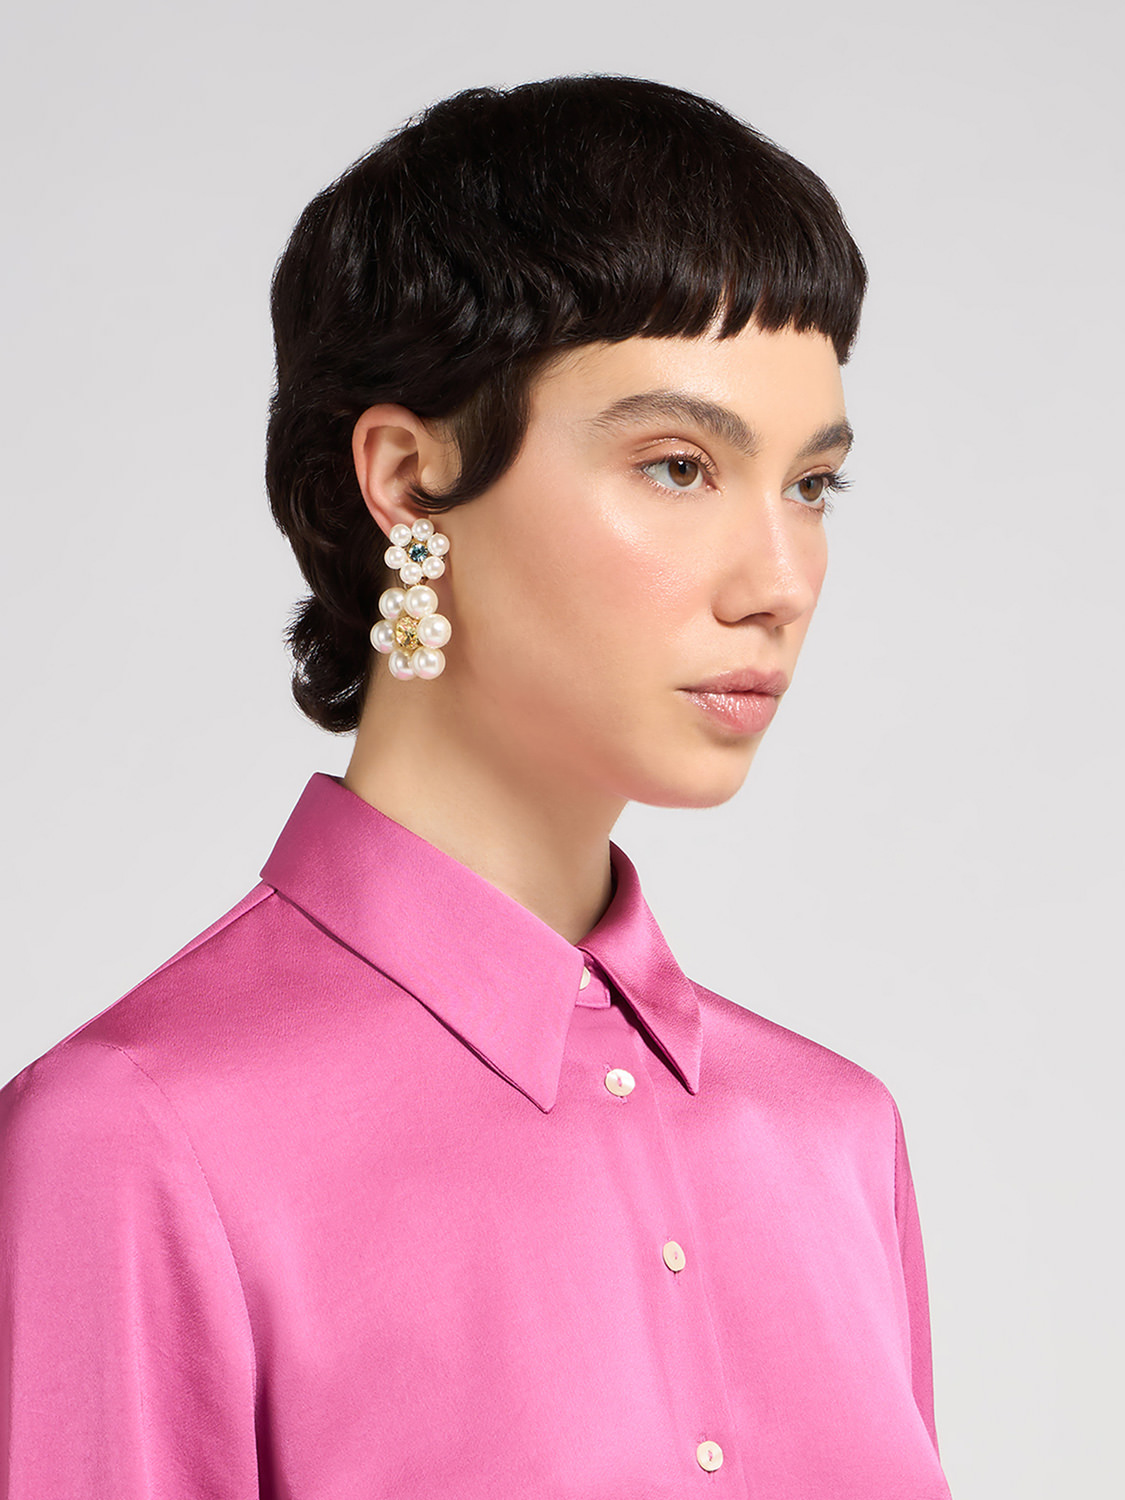 ROSANTICA: Cindy Long Earrings